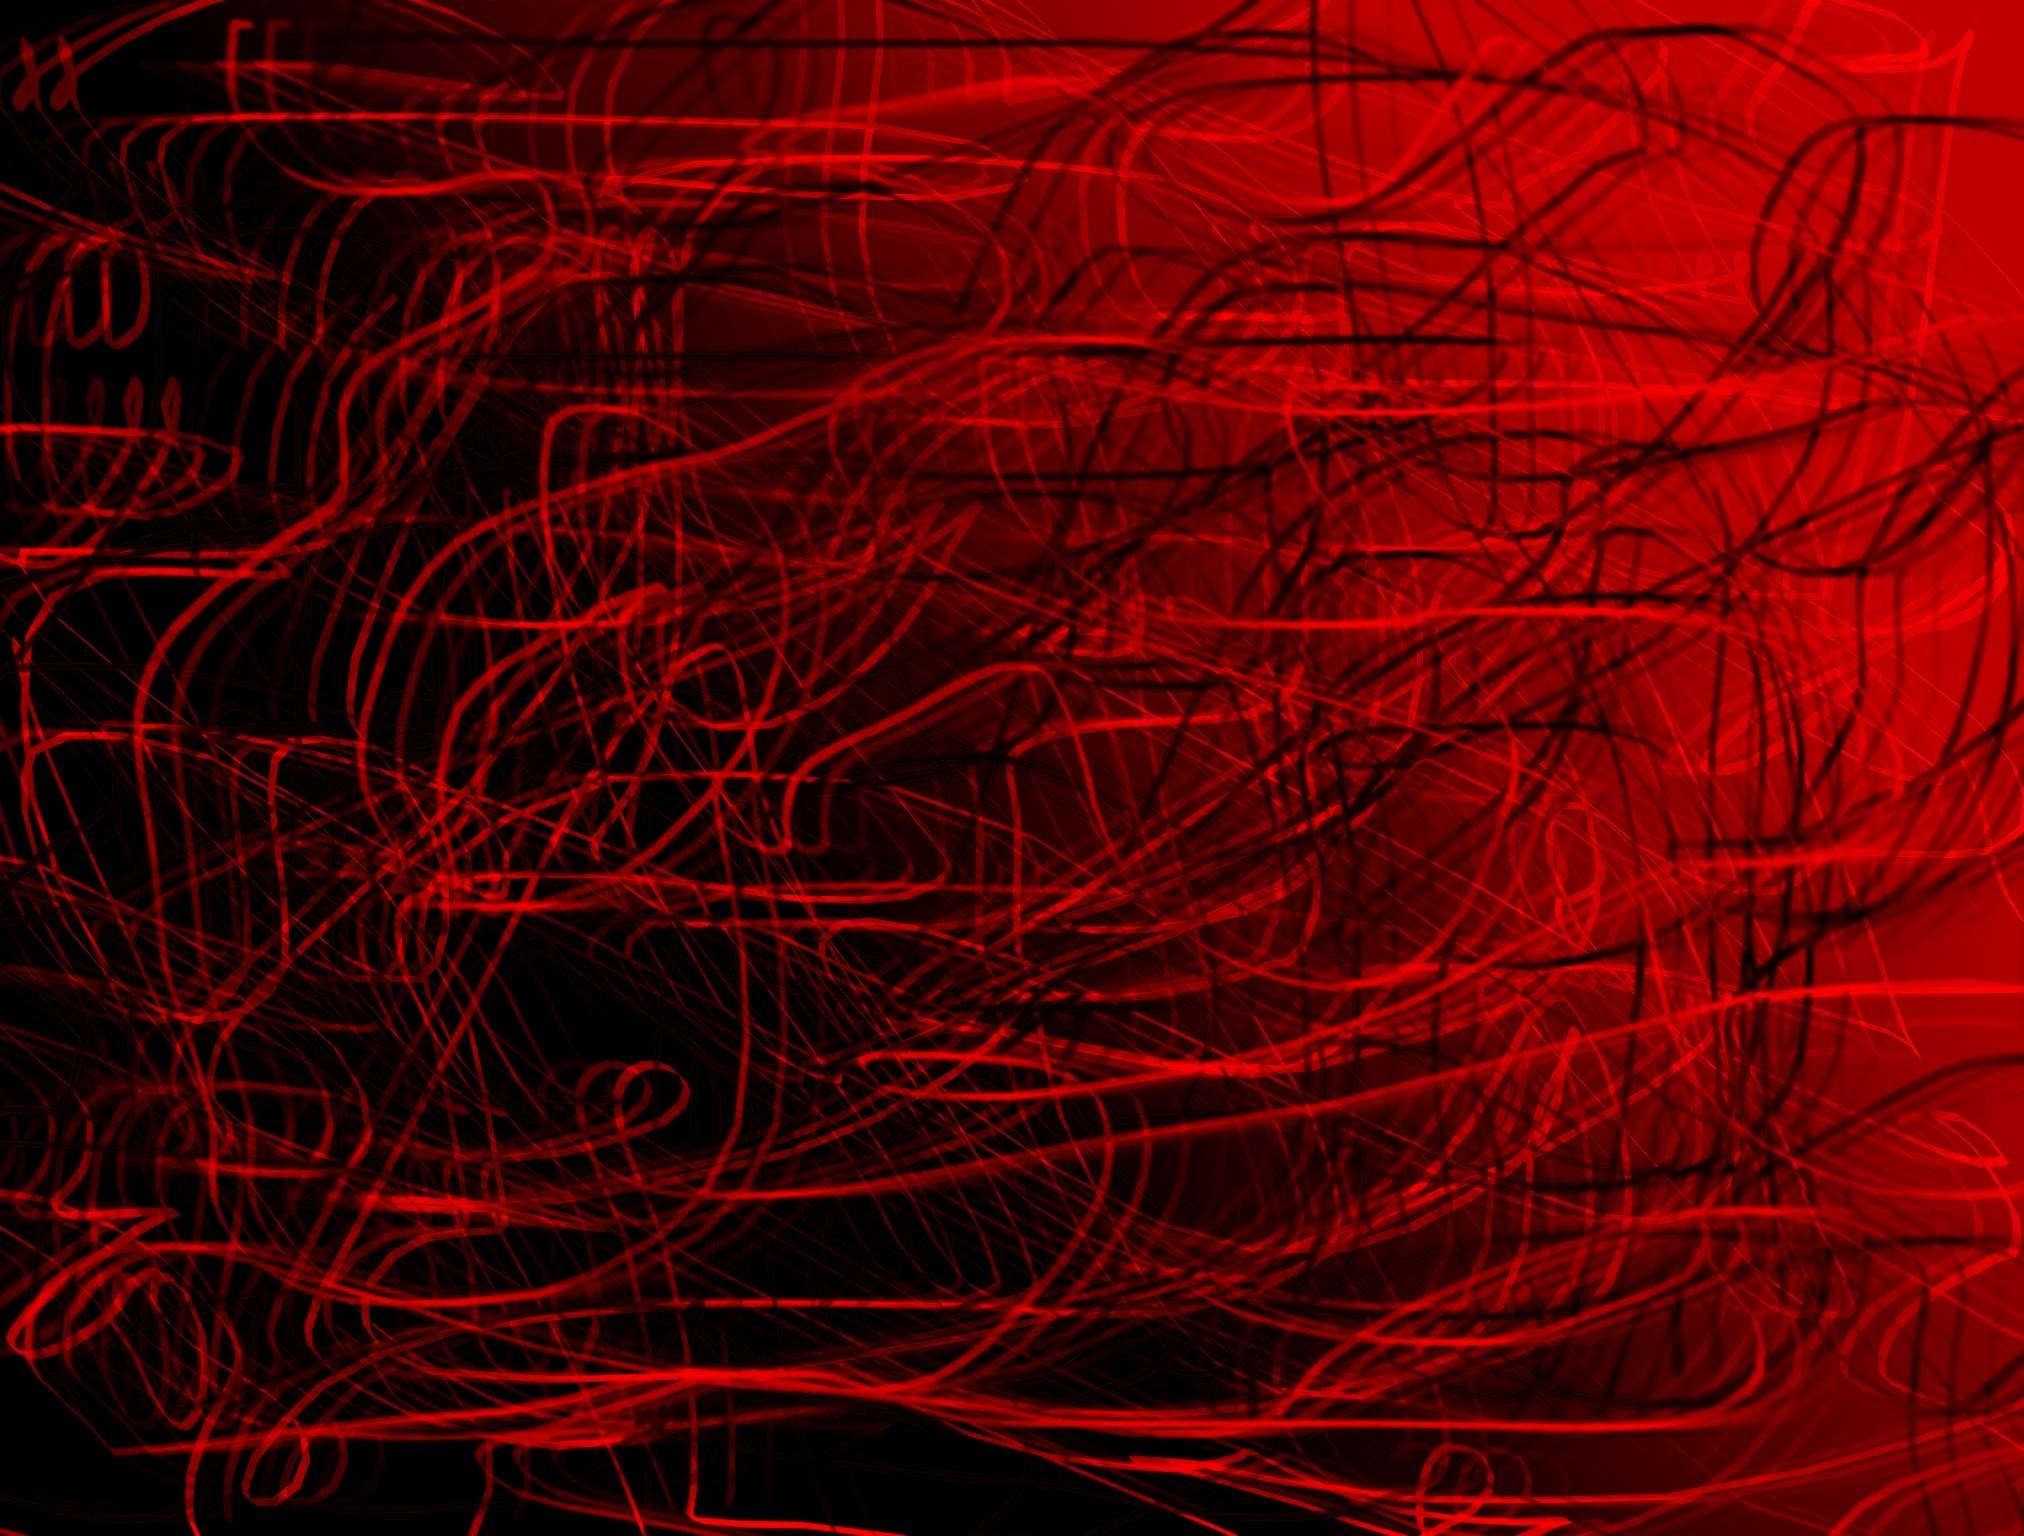 2024x1536 Red and Black Background by Catari-kun on DeviantArt